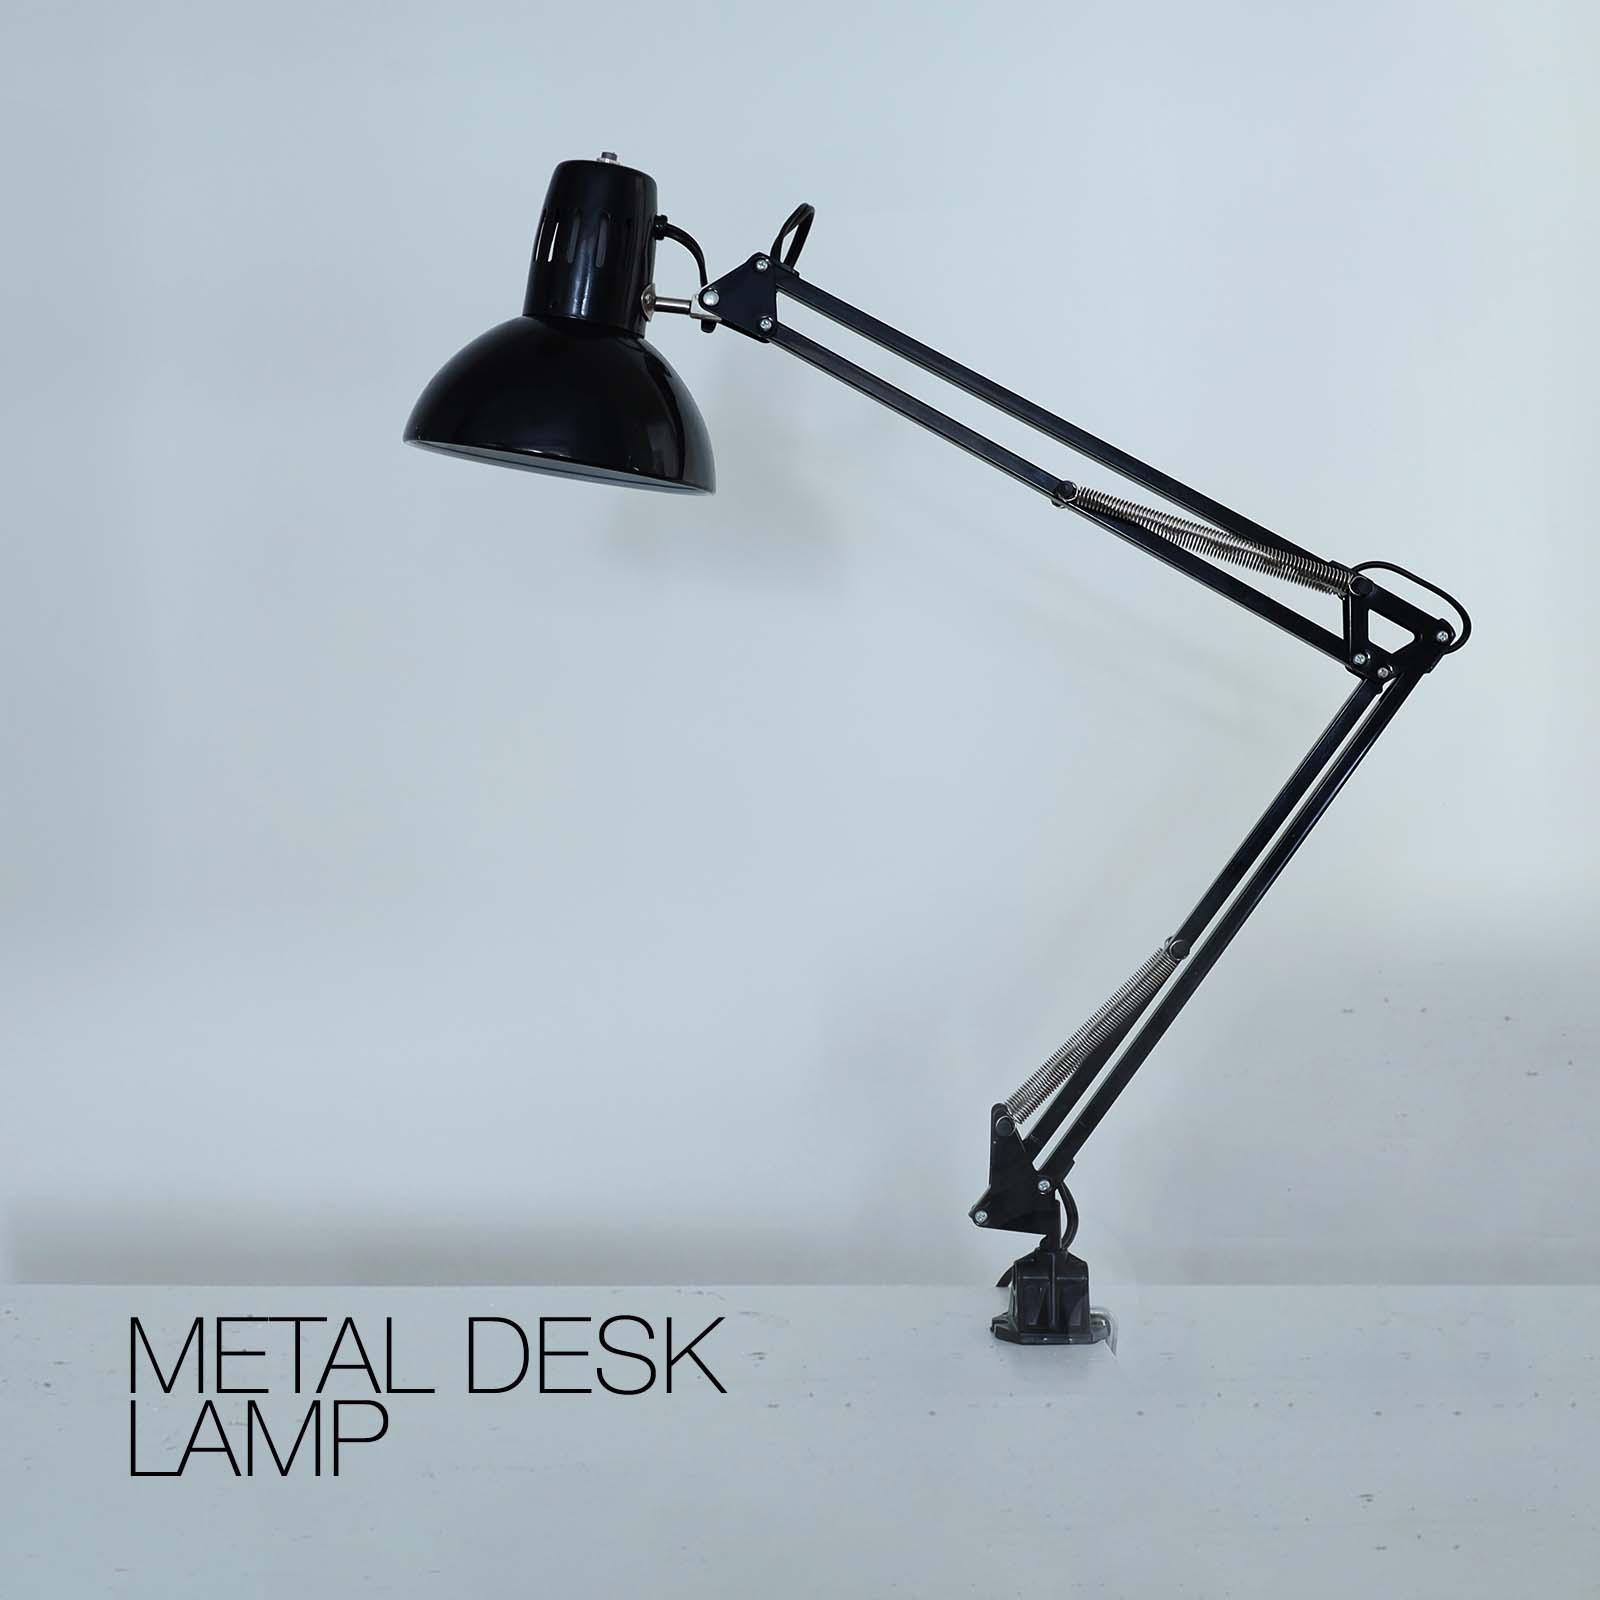 Metal-Desk-Lamp-Cover-Art-Idea-1